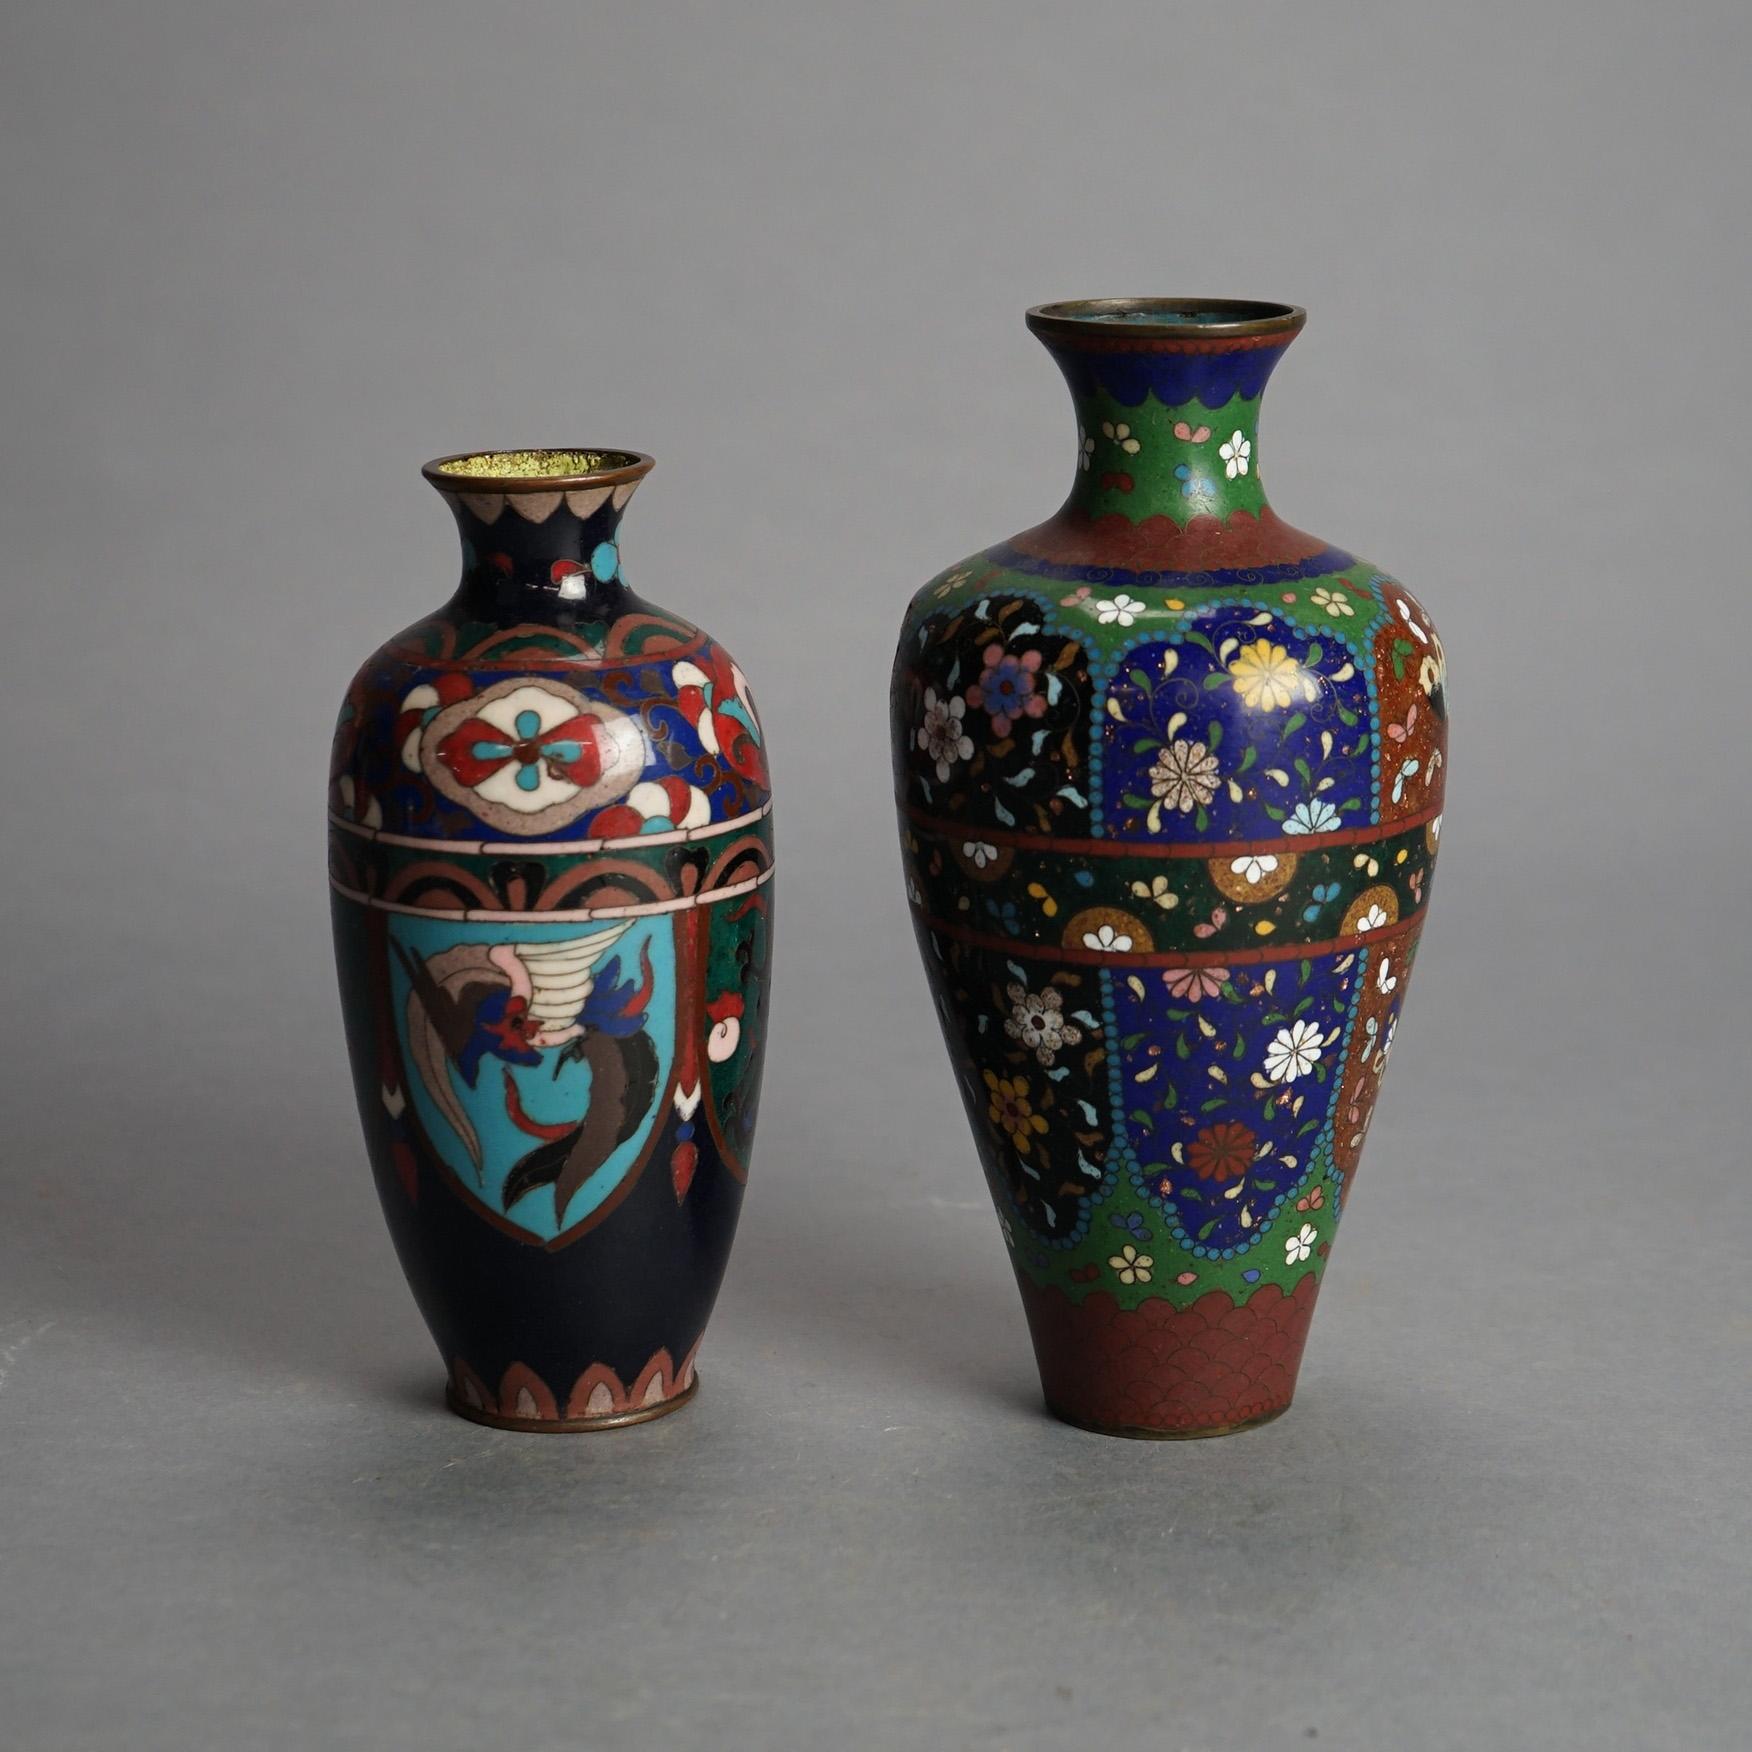 Two Antique Japanese Cloisonne Enameled Vases C1920

Measures - 8